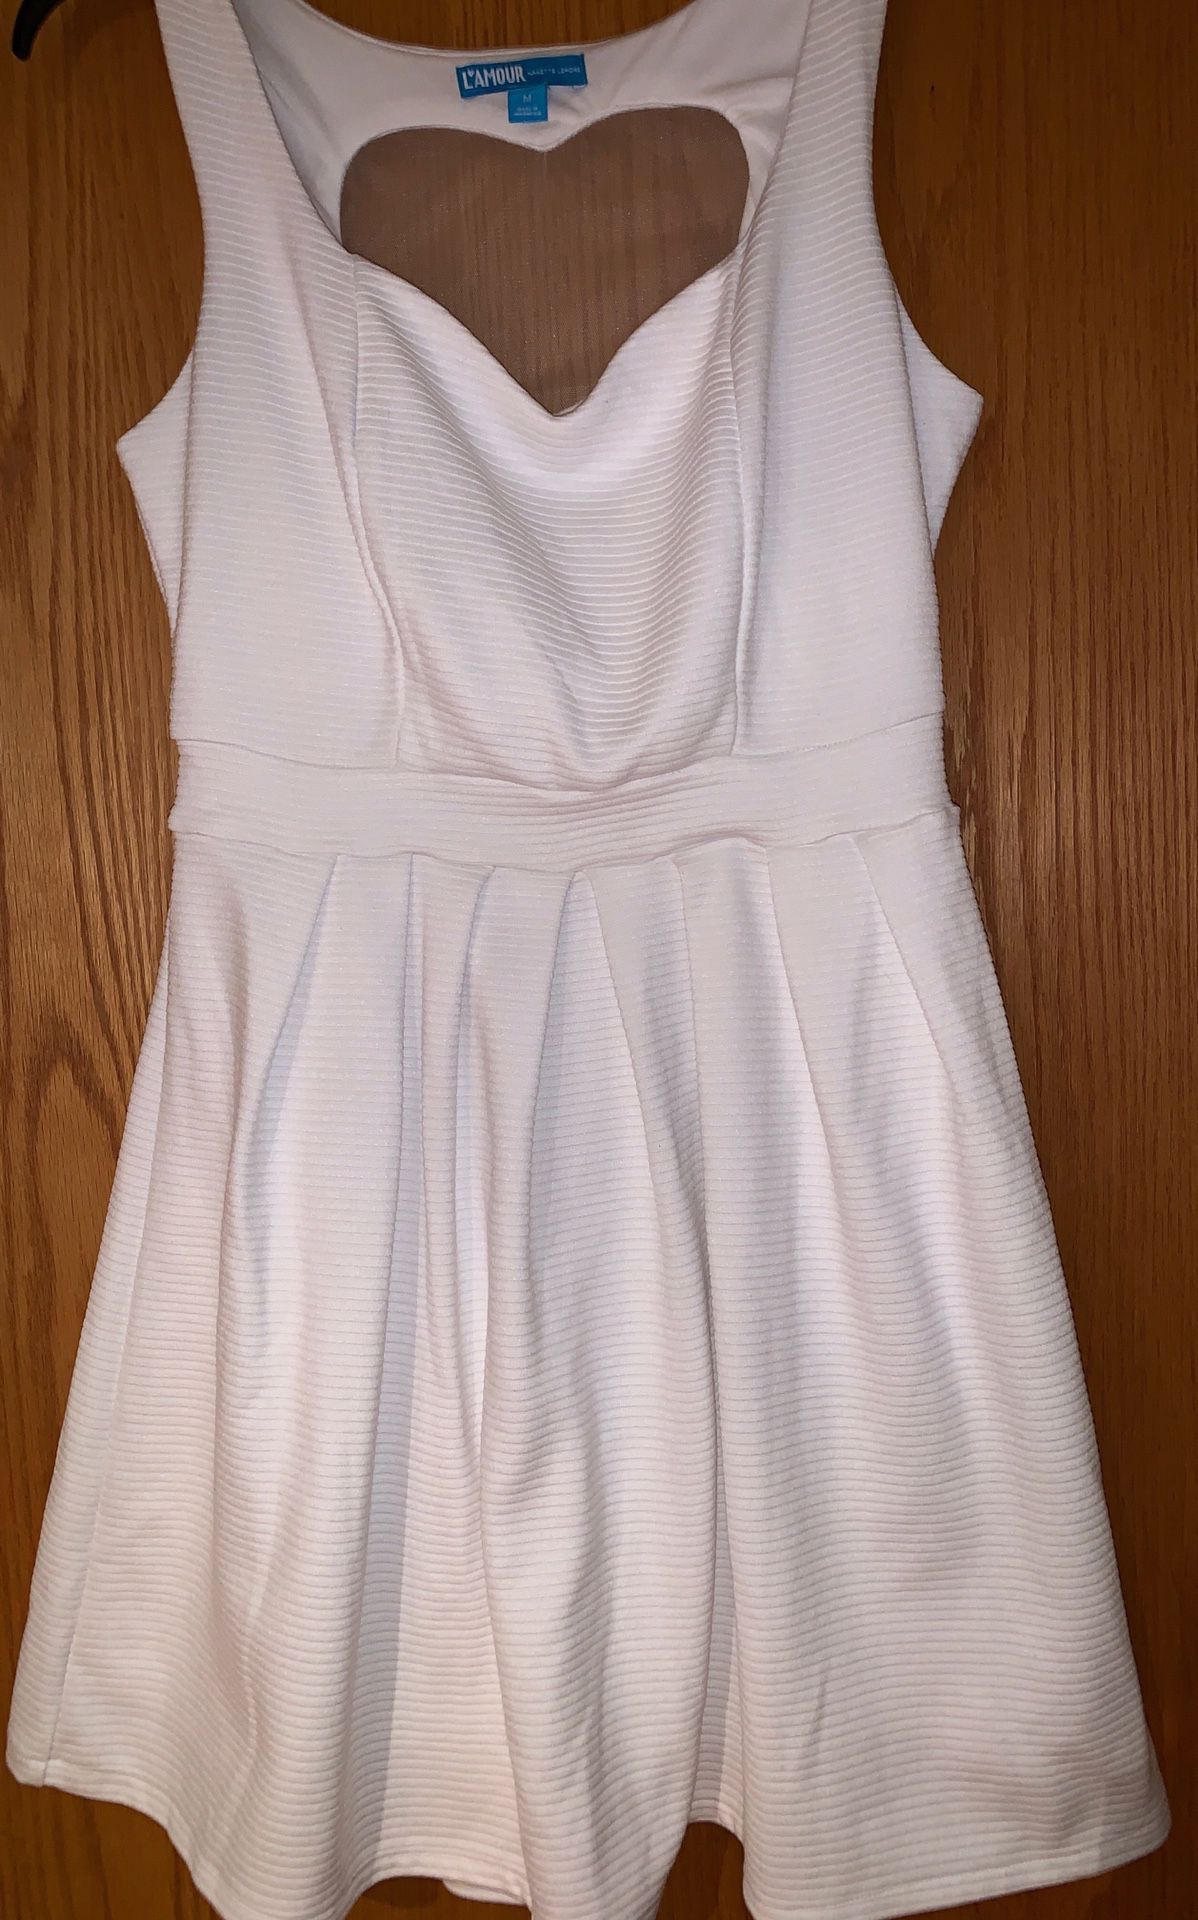 L amour white dress - size medium